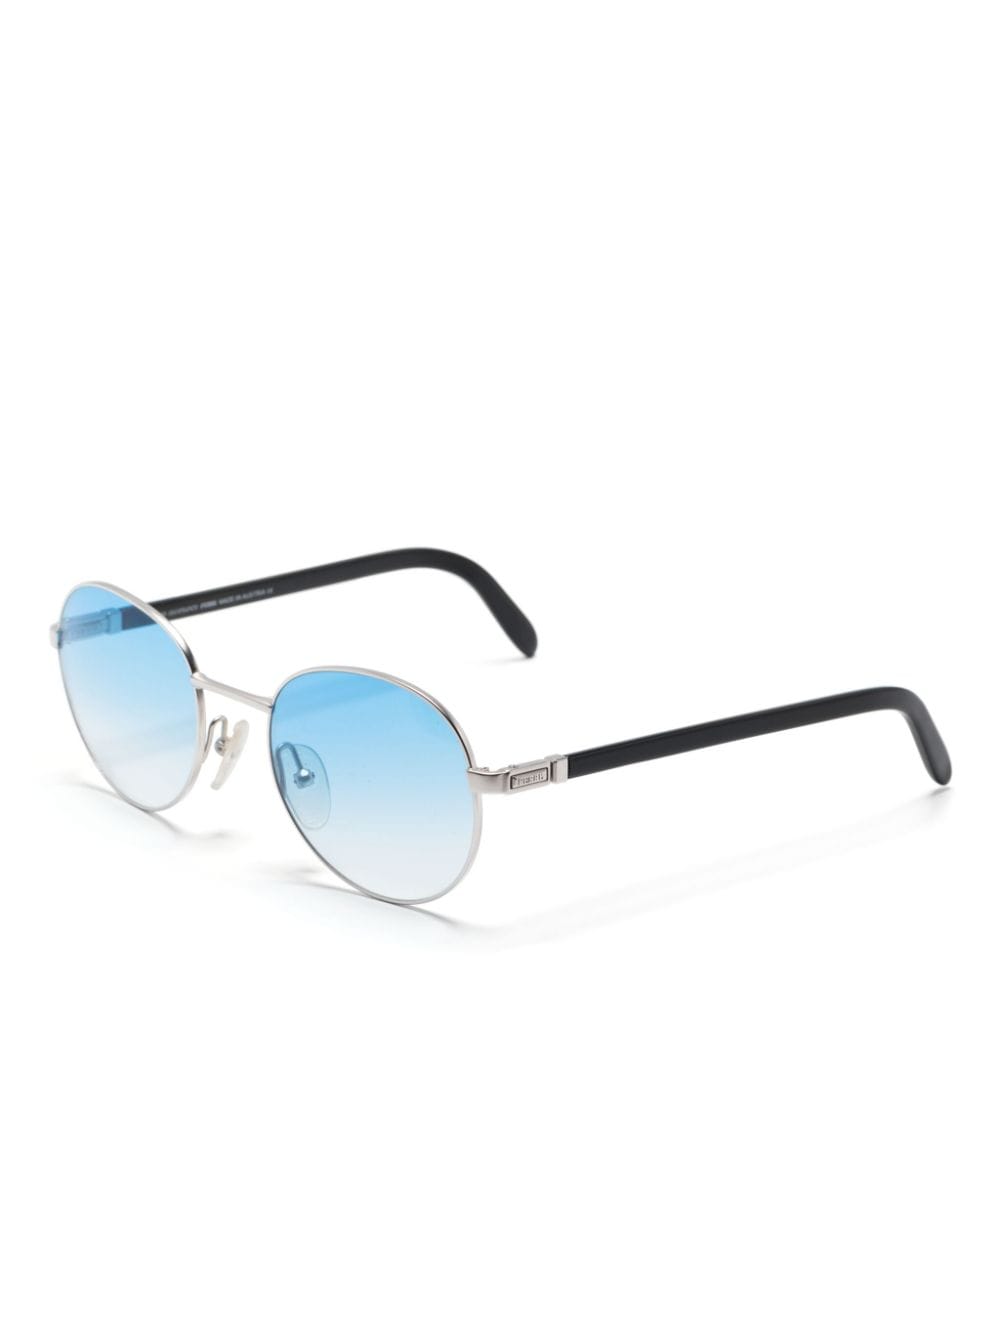 Gianfranco Ferré Pre-Owned round gradient sunglasses - Zwart